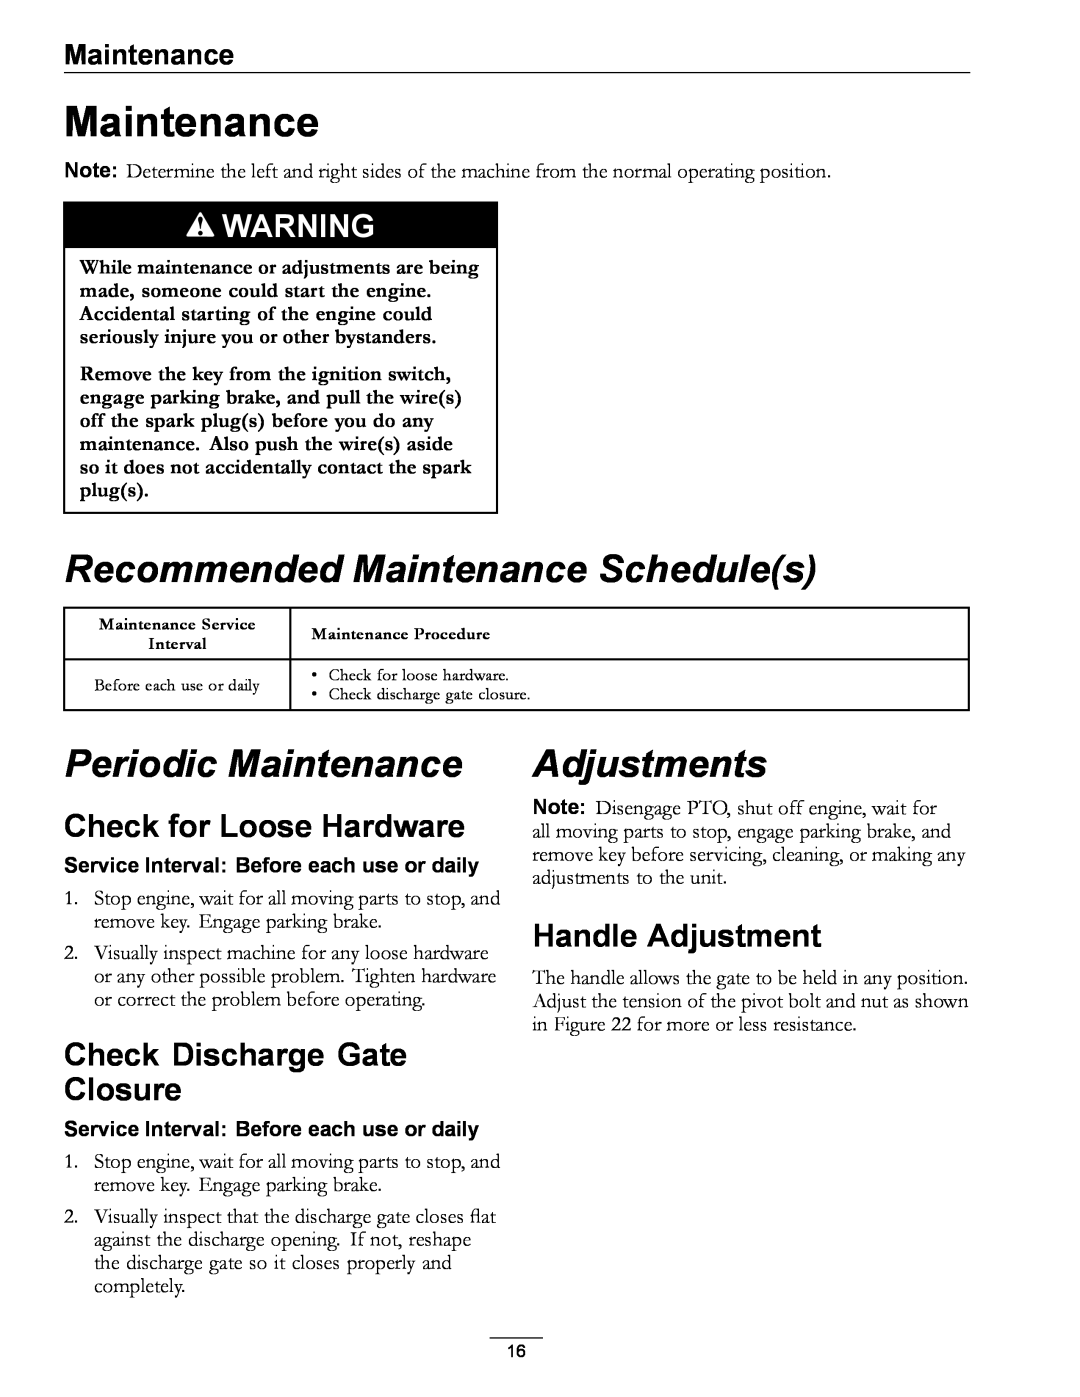 Exmark OCDWB01 manual Maintenance, Check for Loose Hardware, Check Discharge Gate Closure, Handle Adjustment, Adjustments 